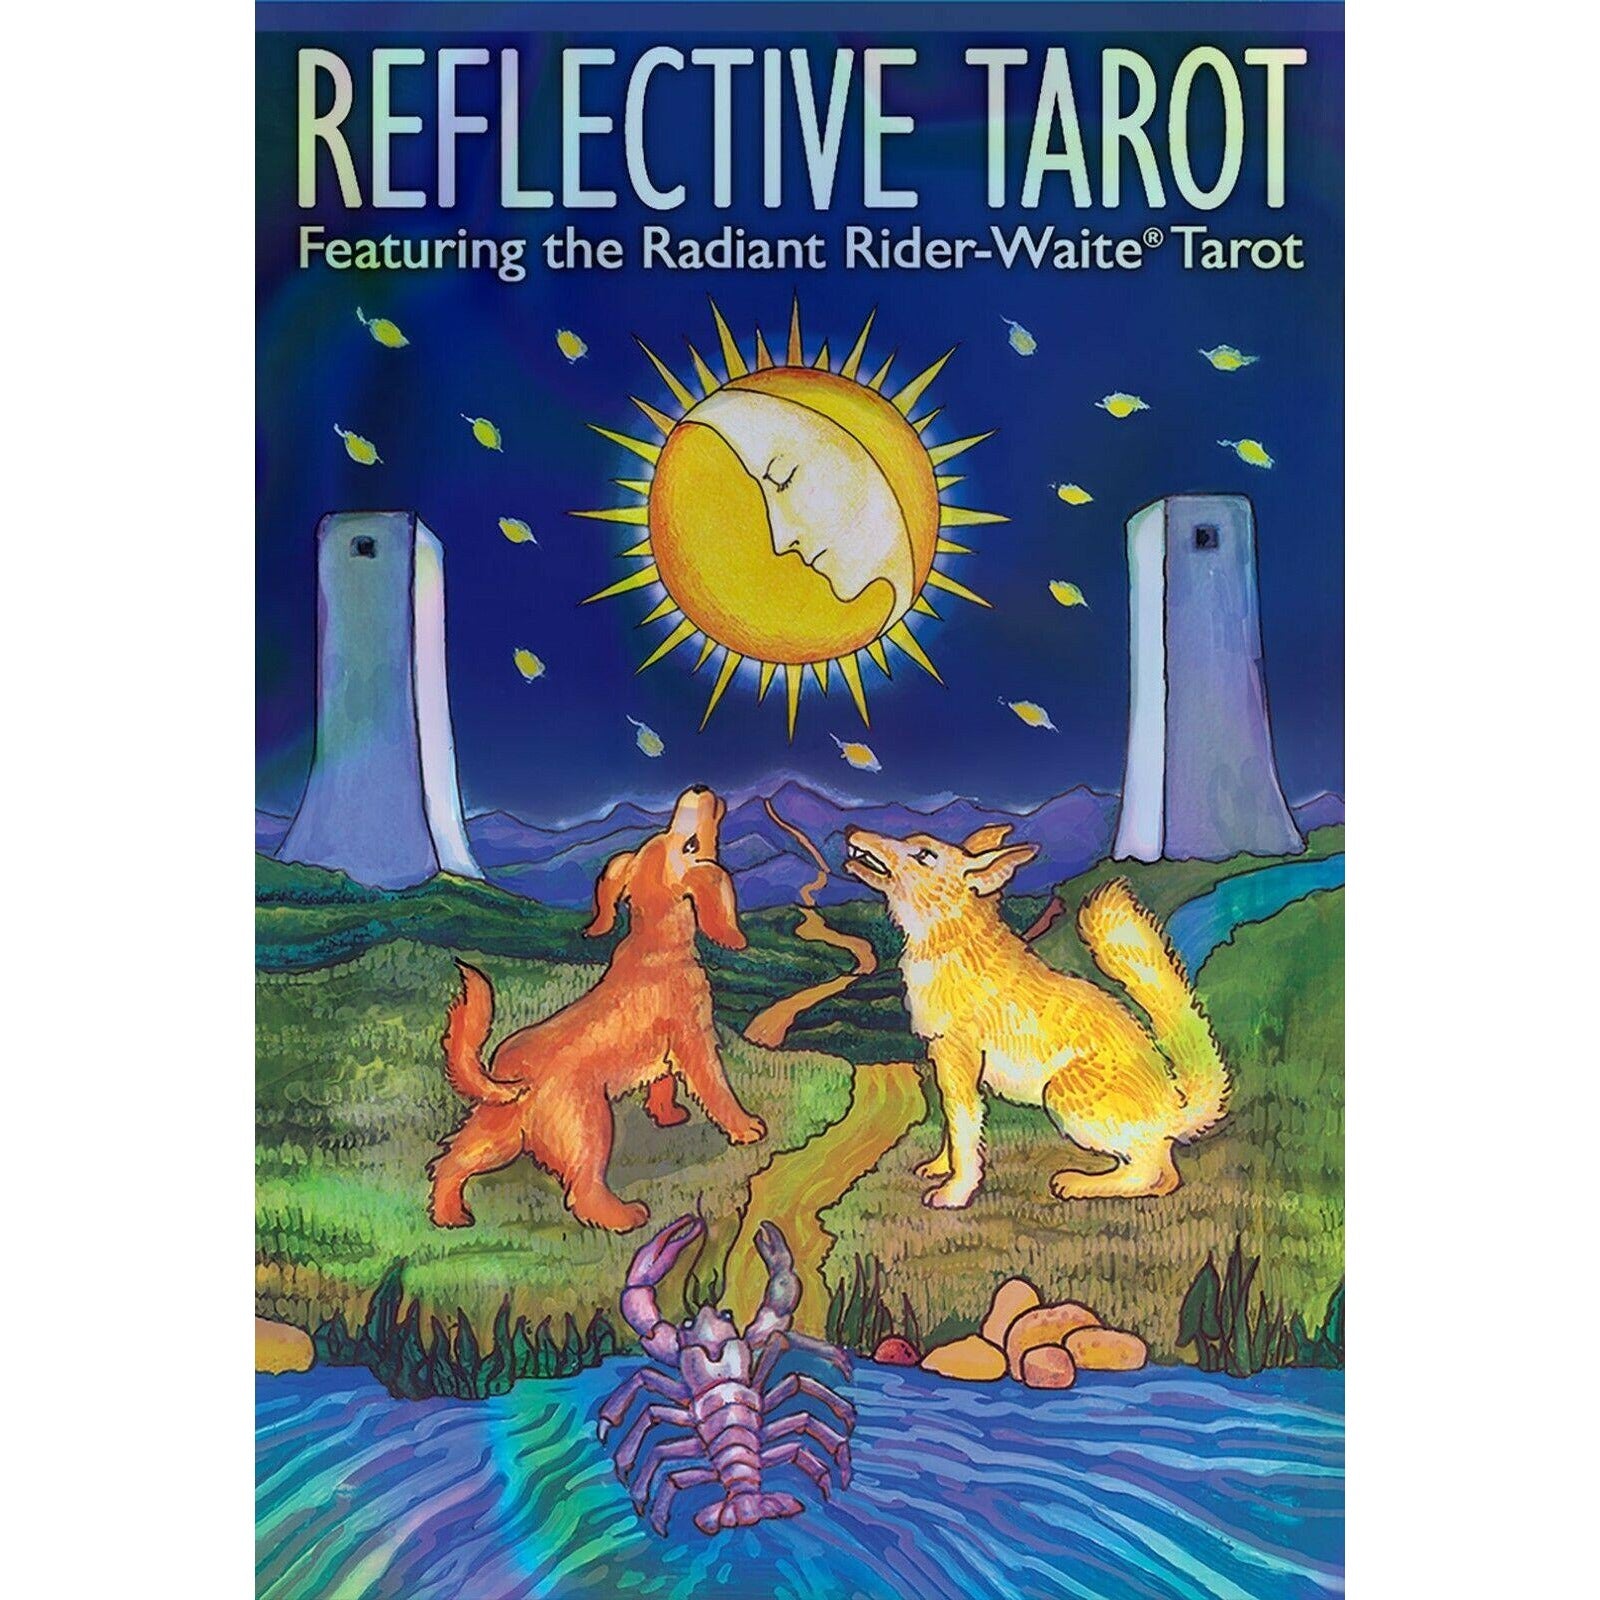 Reflective Tarot Featuring the Radiant Rider-Waite(Pocket Size)